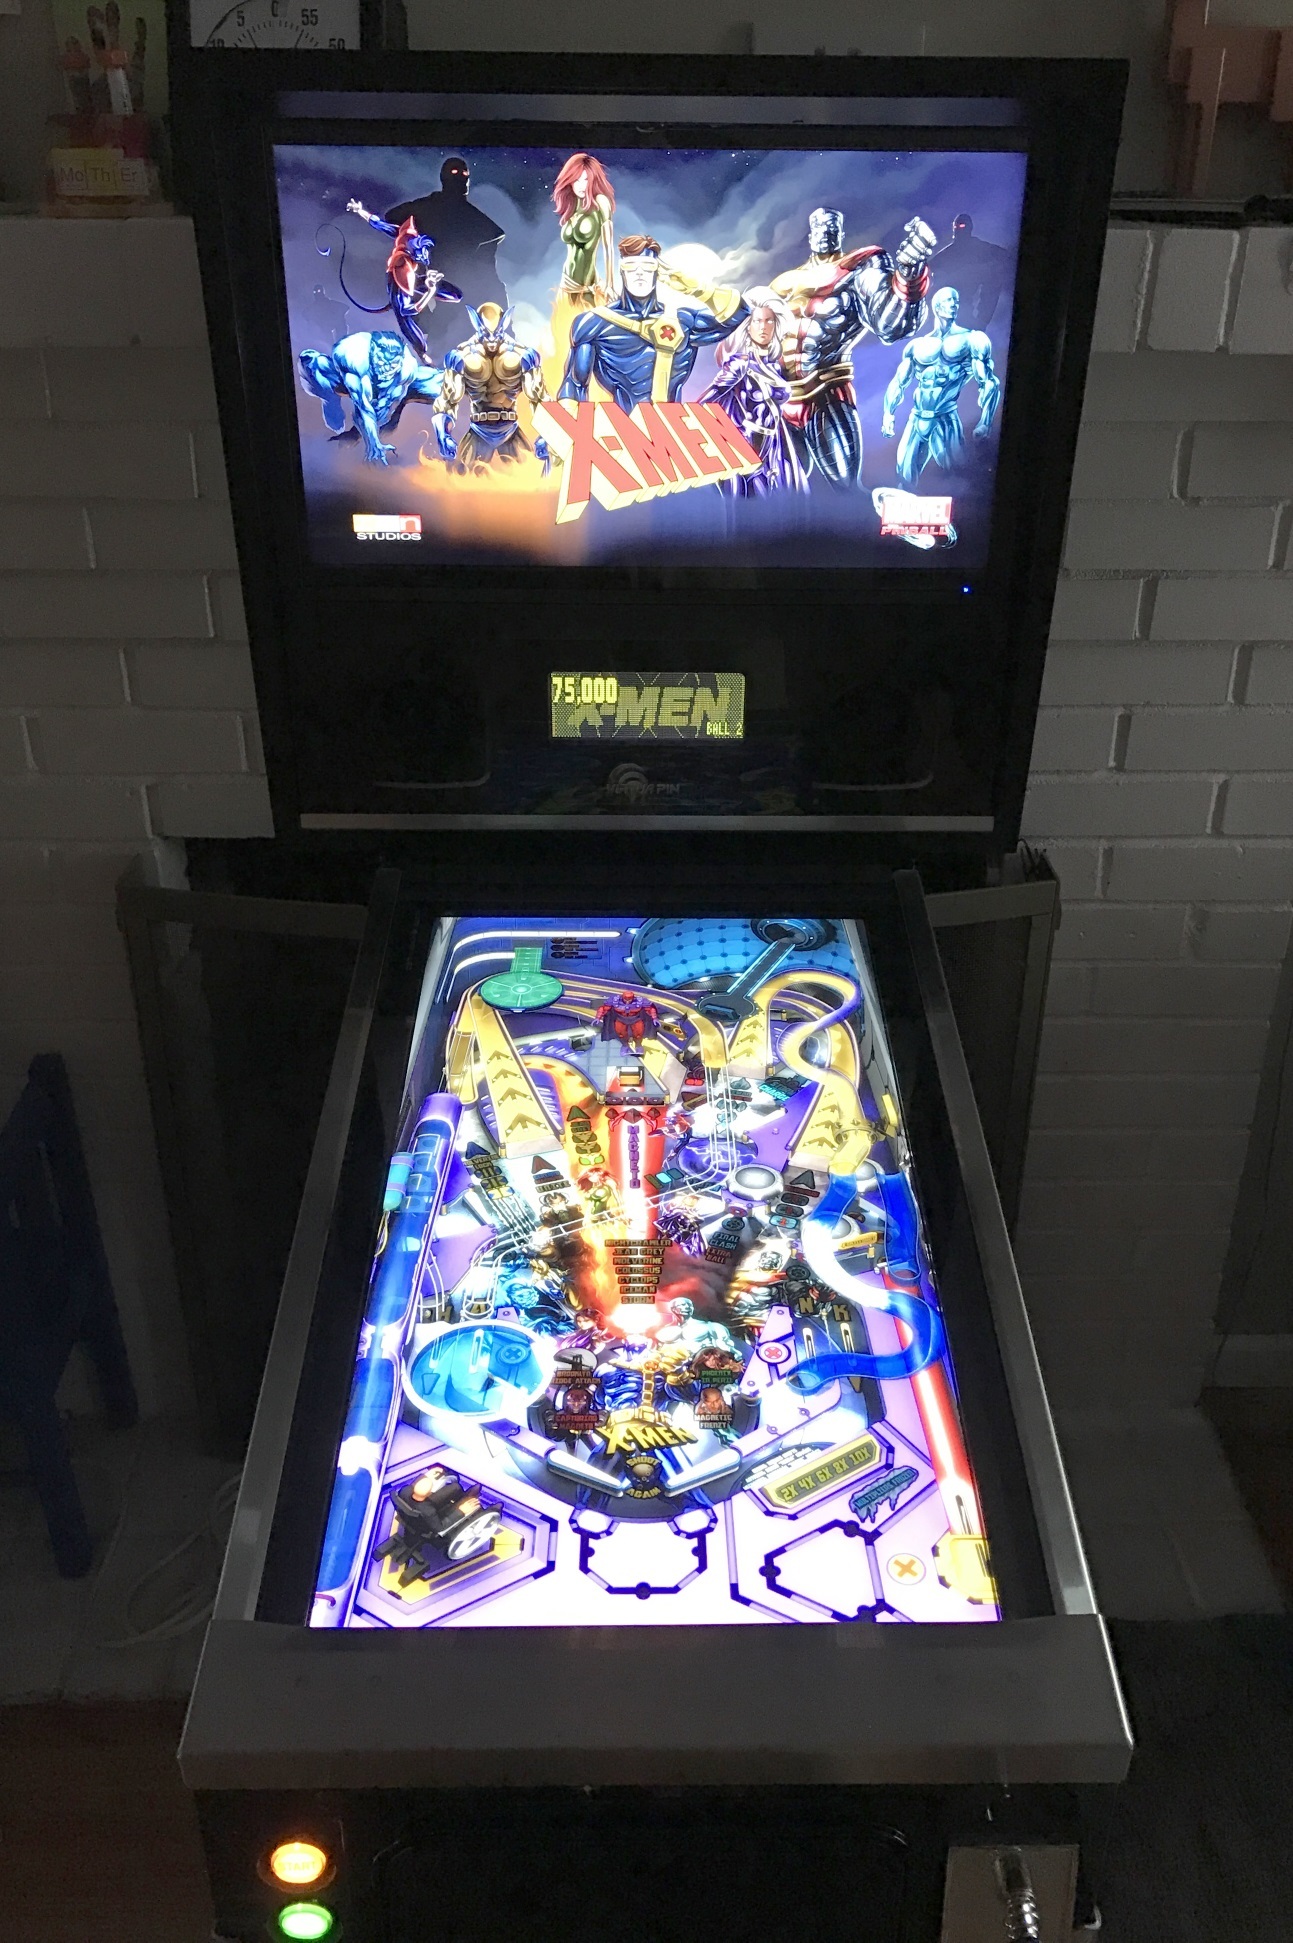 the pinball arcade cabinet mode